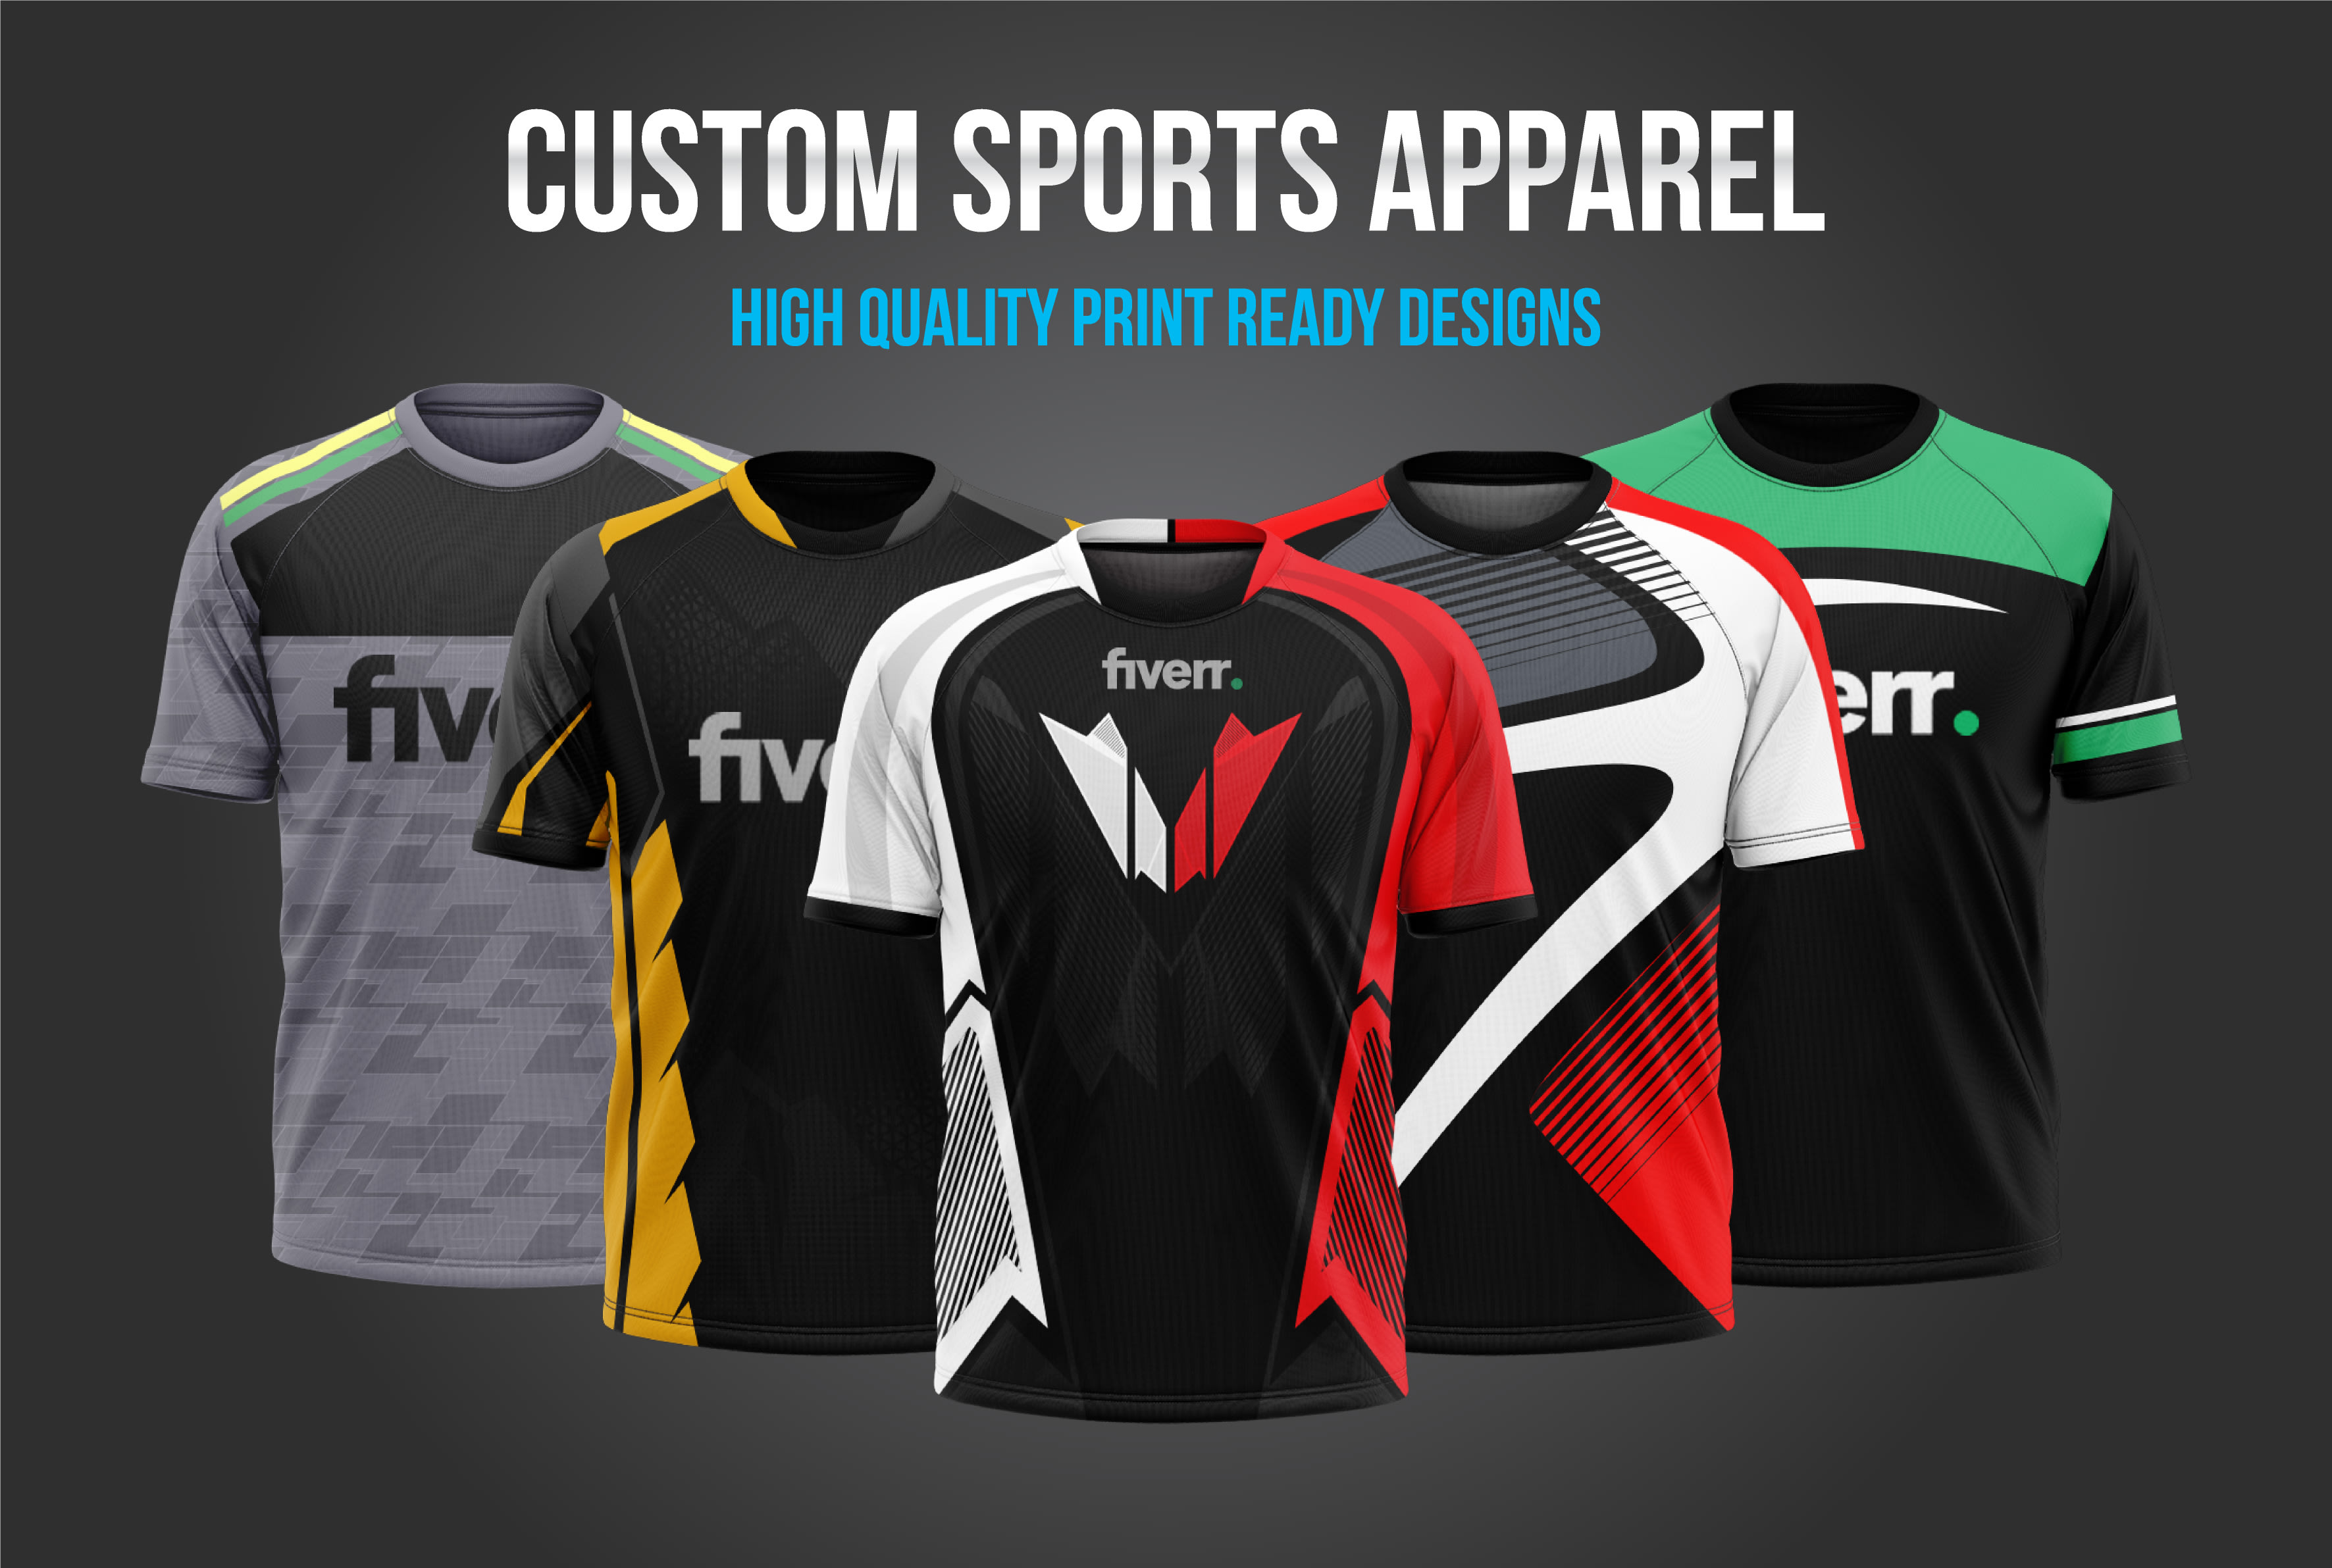 custom sports apparel